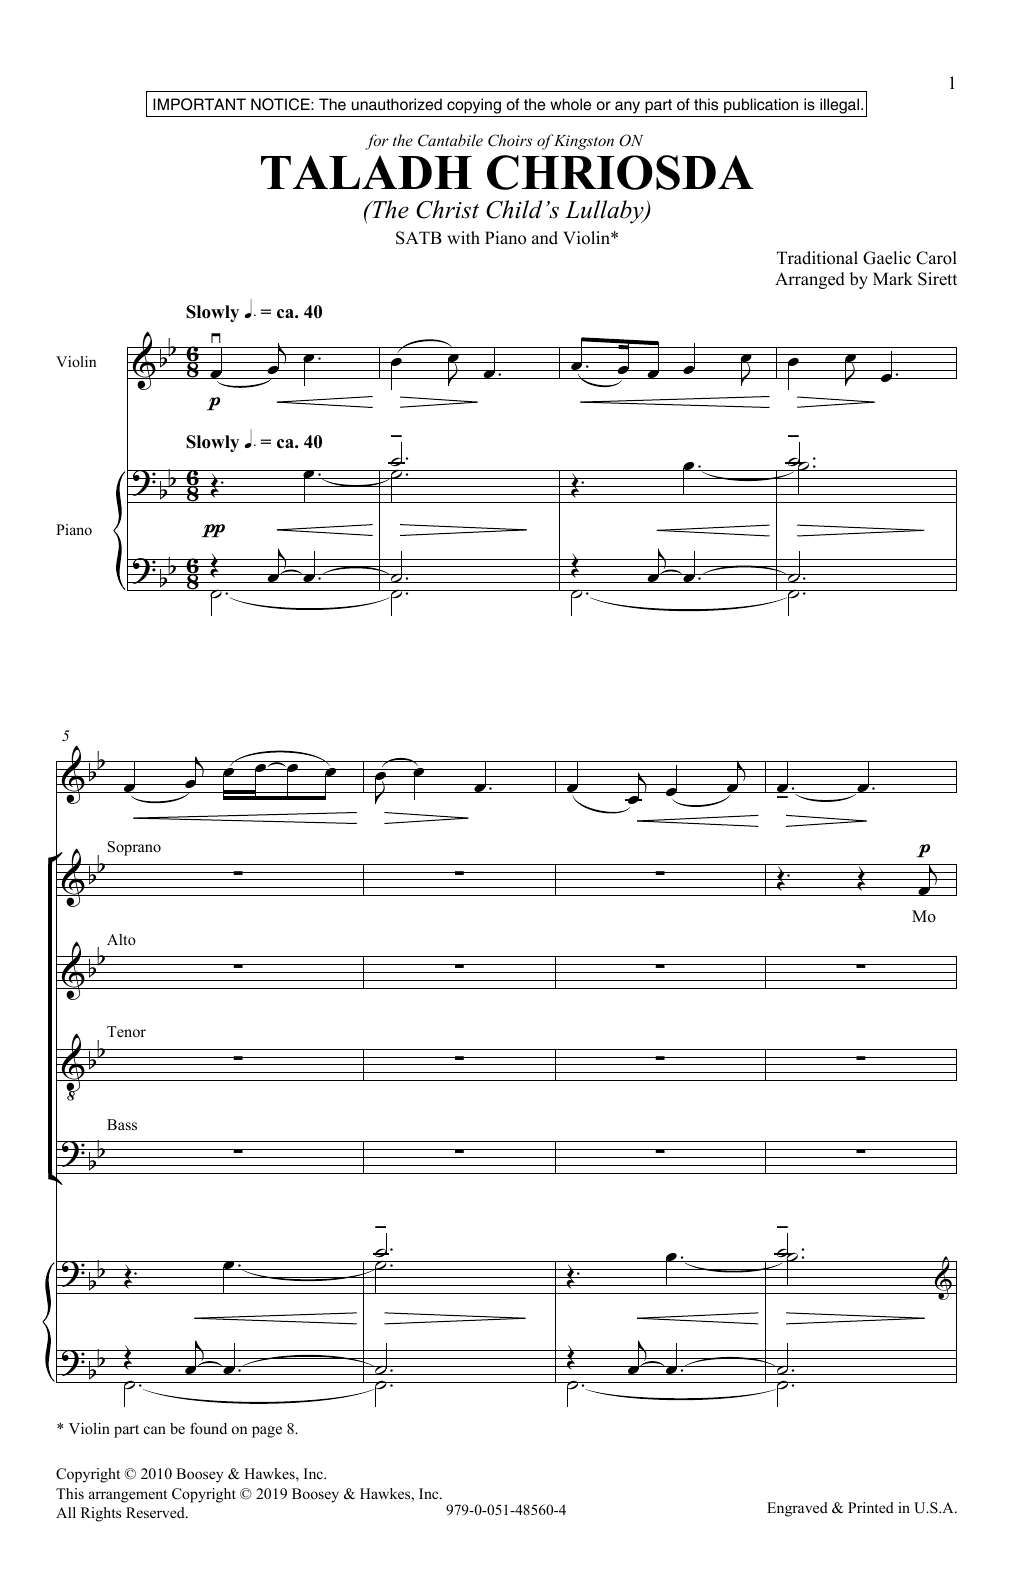 Traditional Gaelic Carol Taladh Chriosda (arr. Mark Sirett) Sheet Music Notes & Chords for SATB Choir - Download or Print PDF